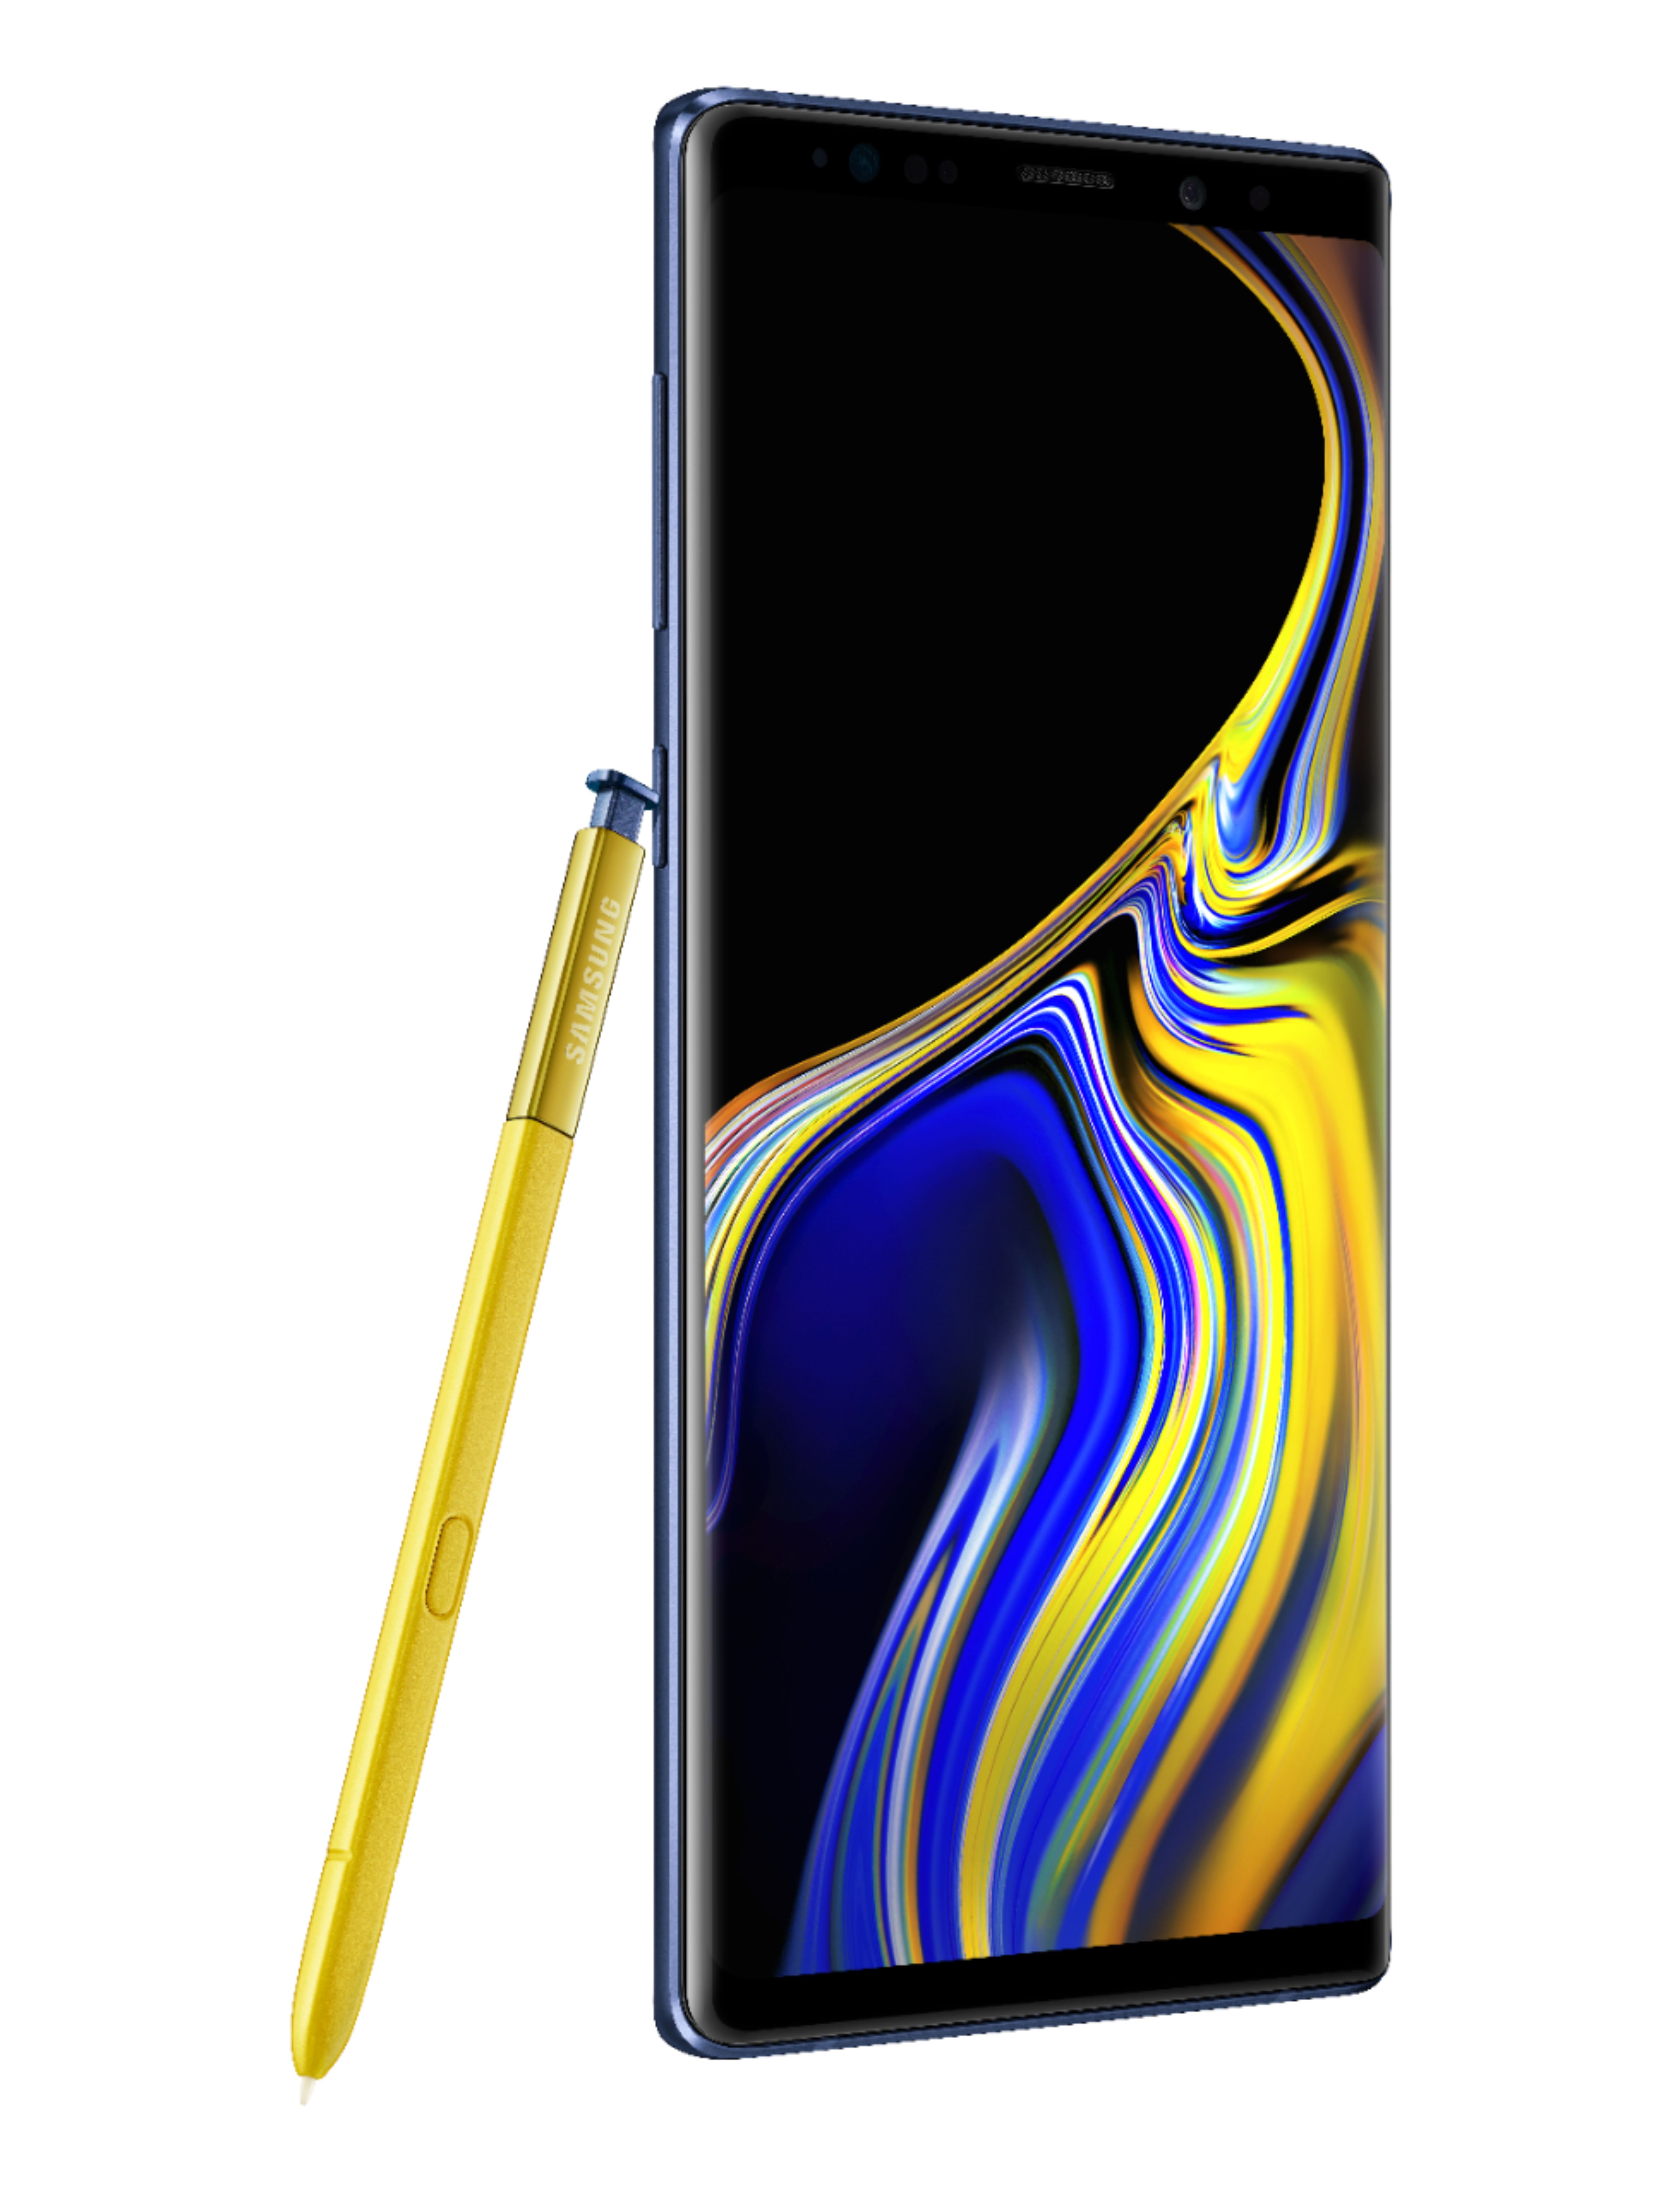 Angle View: Samsung - Geek Squad Certified Refurbished Galaxy Note9 128GB - Ocean Blue (Verizon)